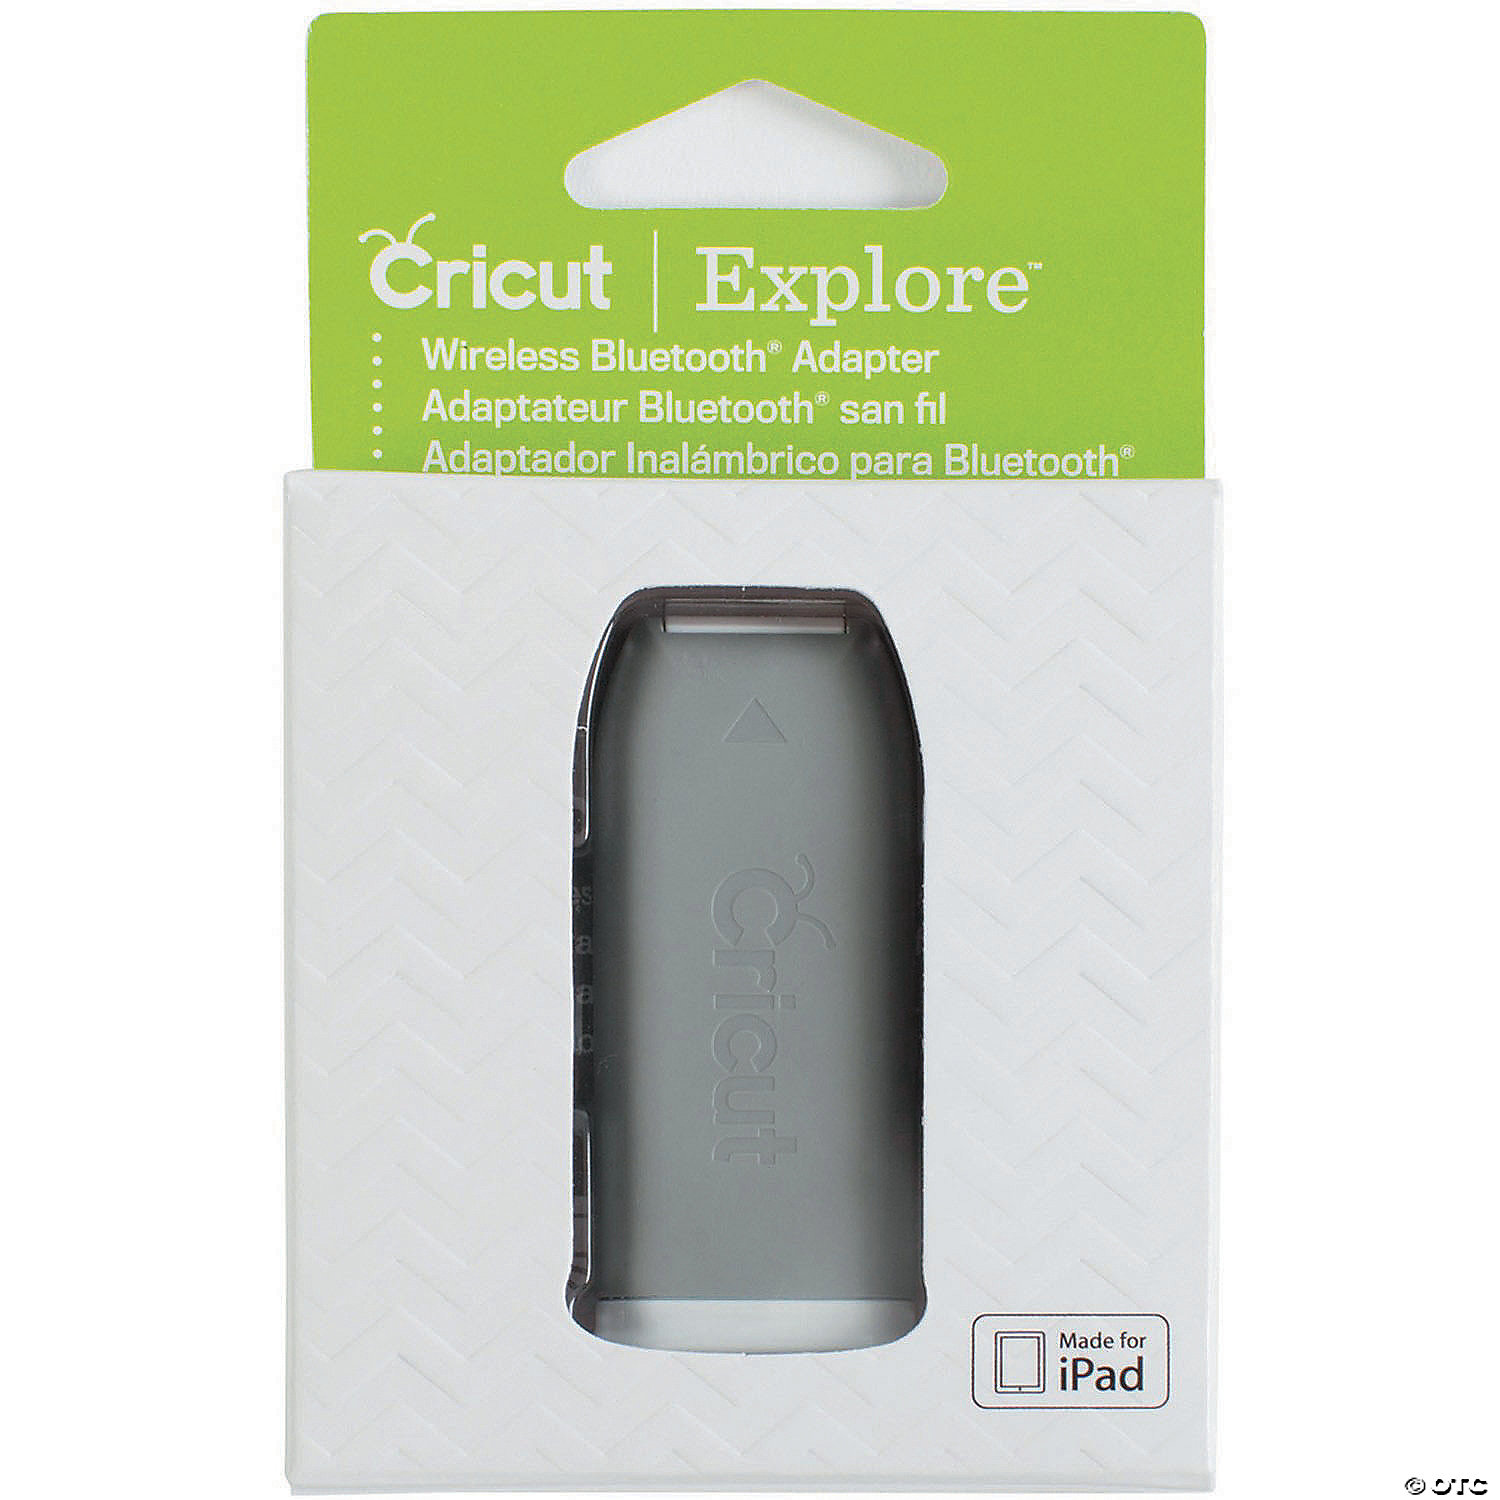  Cricut Explore One Accessory Adapter and Pen, Black